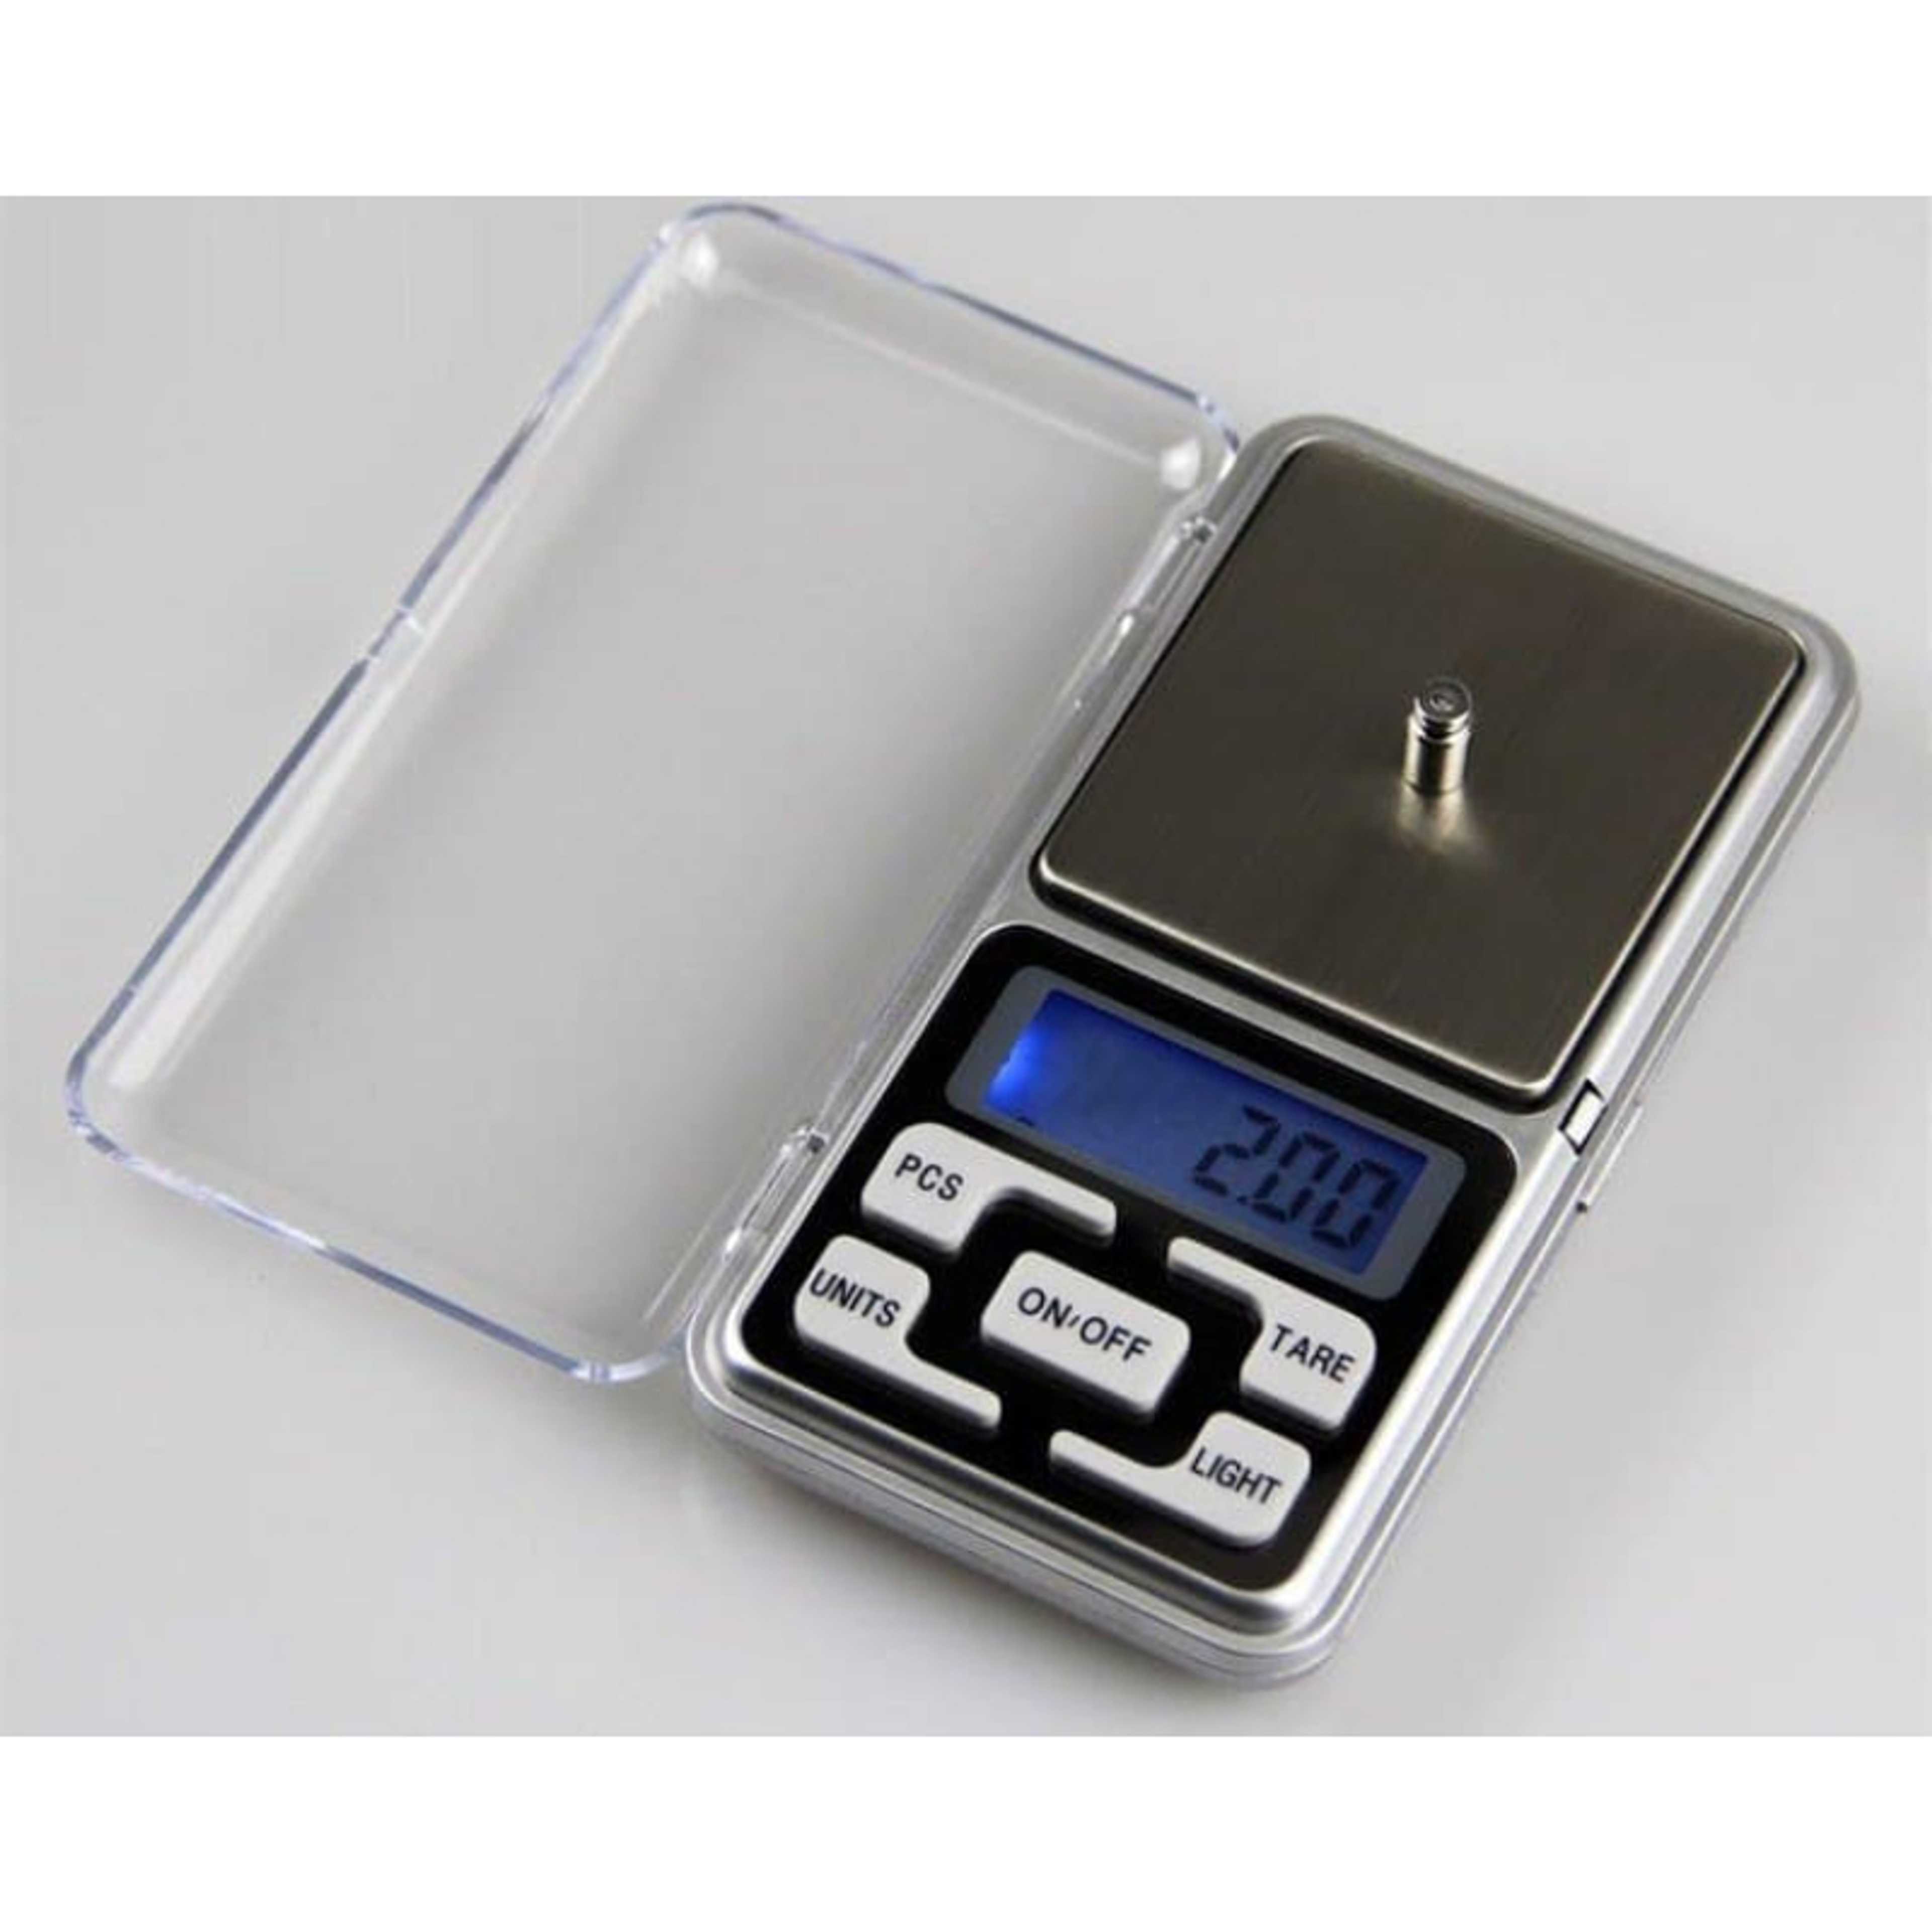 500g X 0.1g Mini Electronic Digital Jewelry & Kitchen Scale Balance Pocket Gram LCD Display